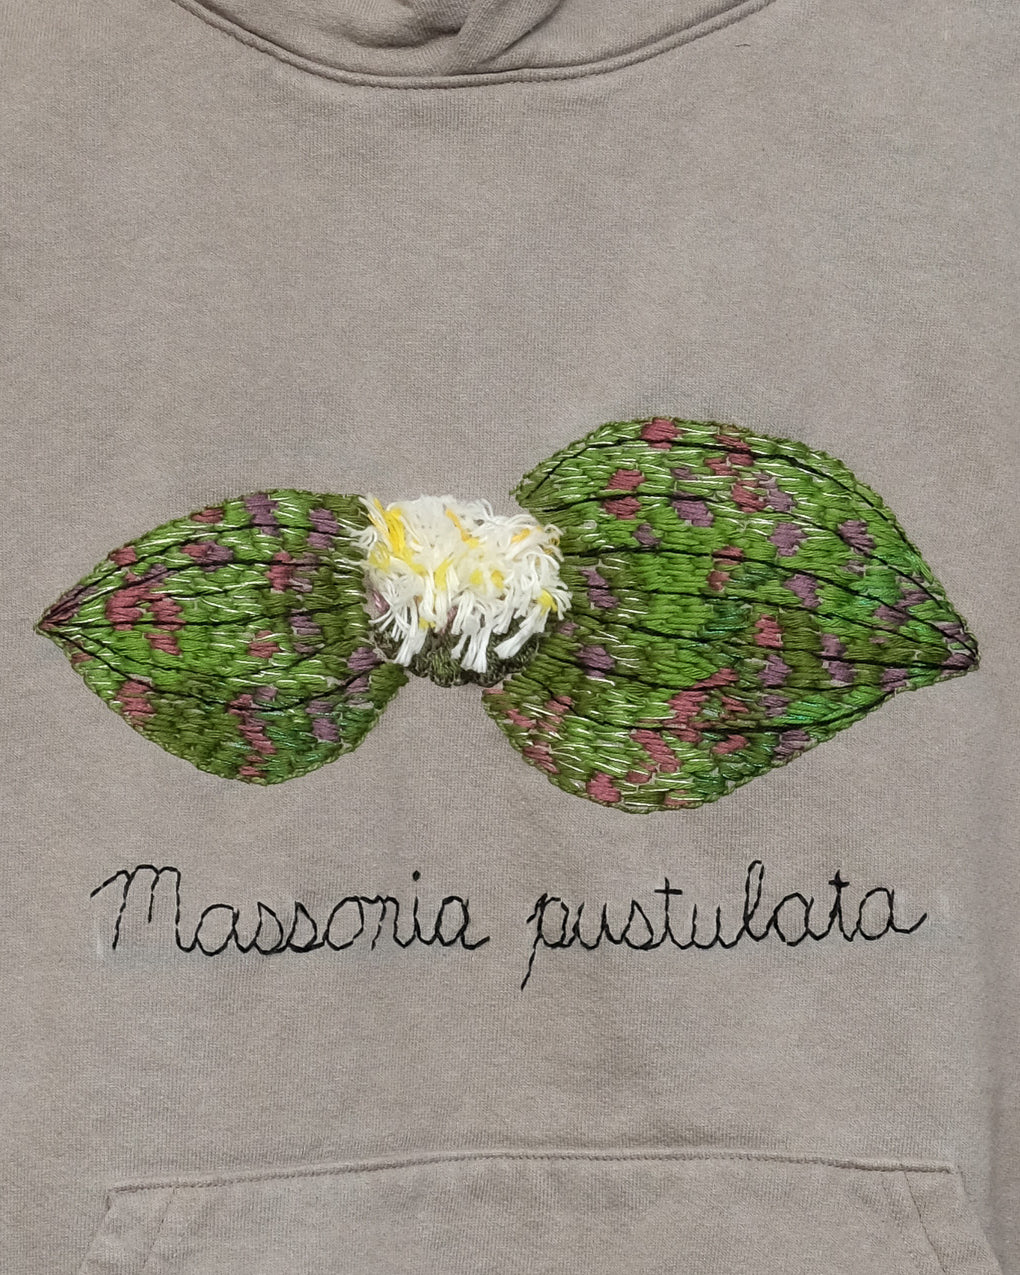 Massonia pustulata (L) Hooded Sweatshirt